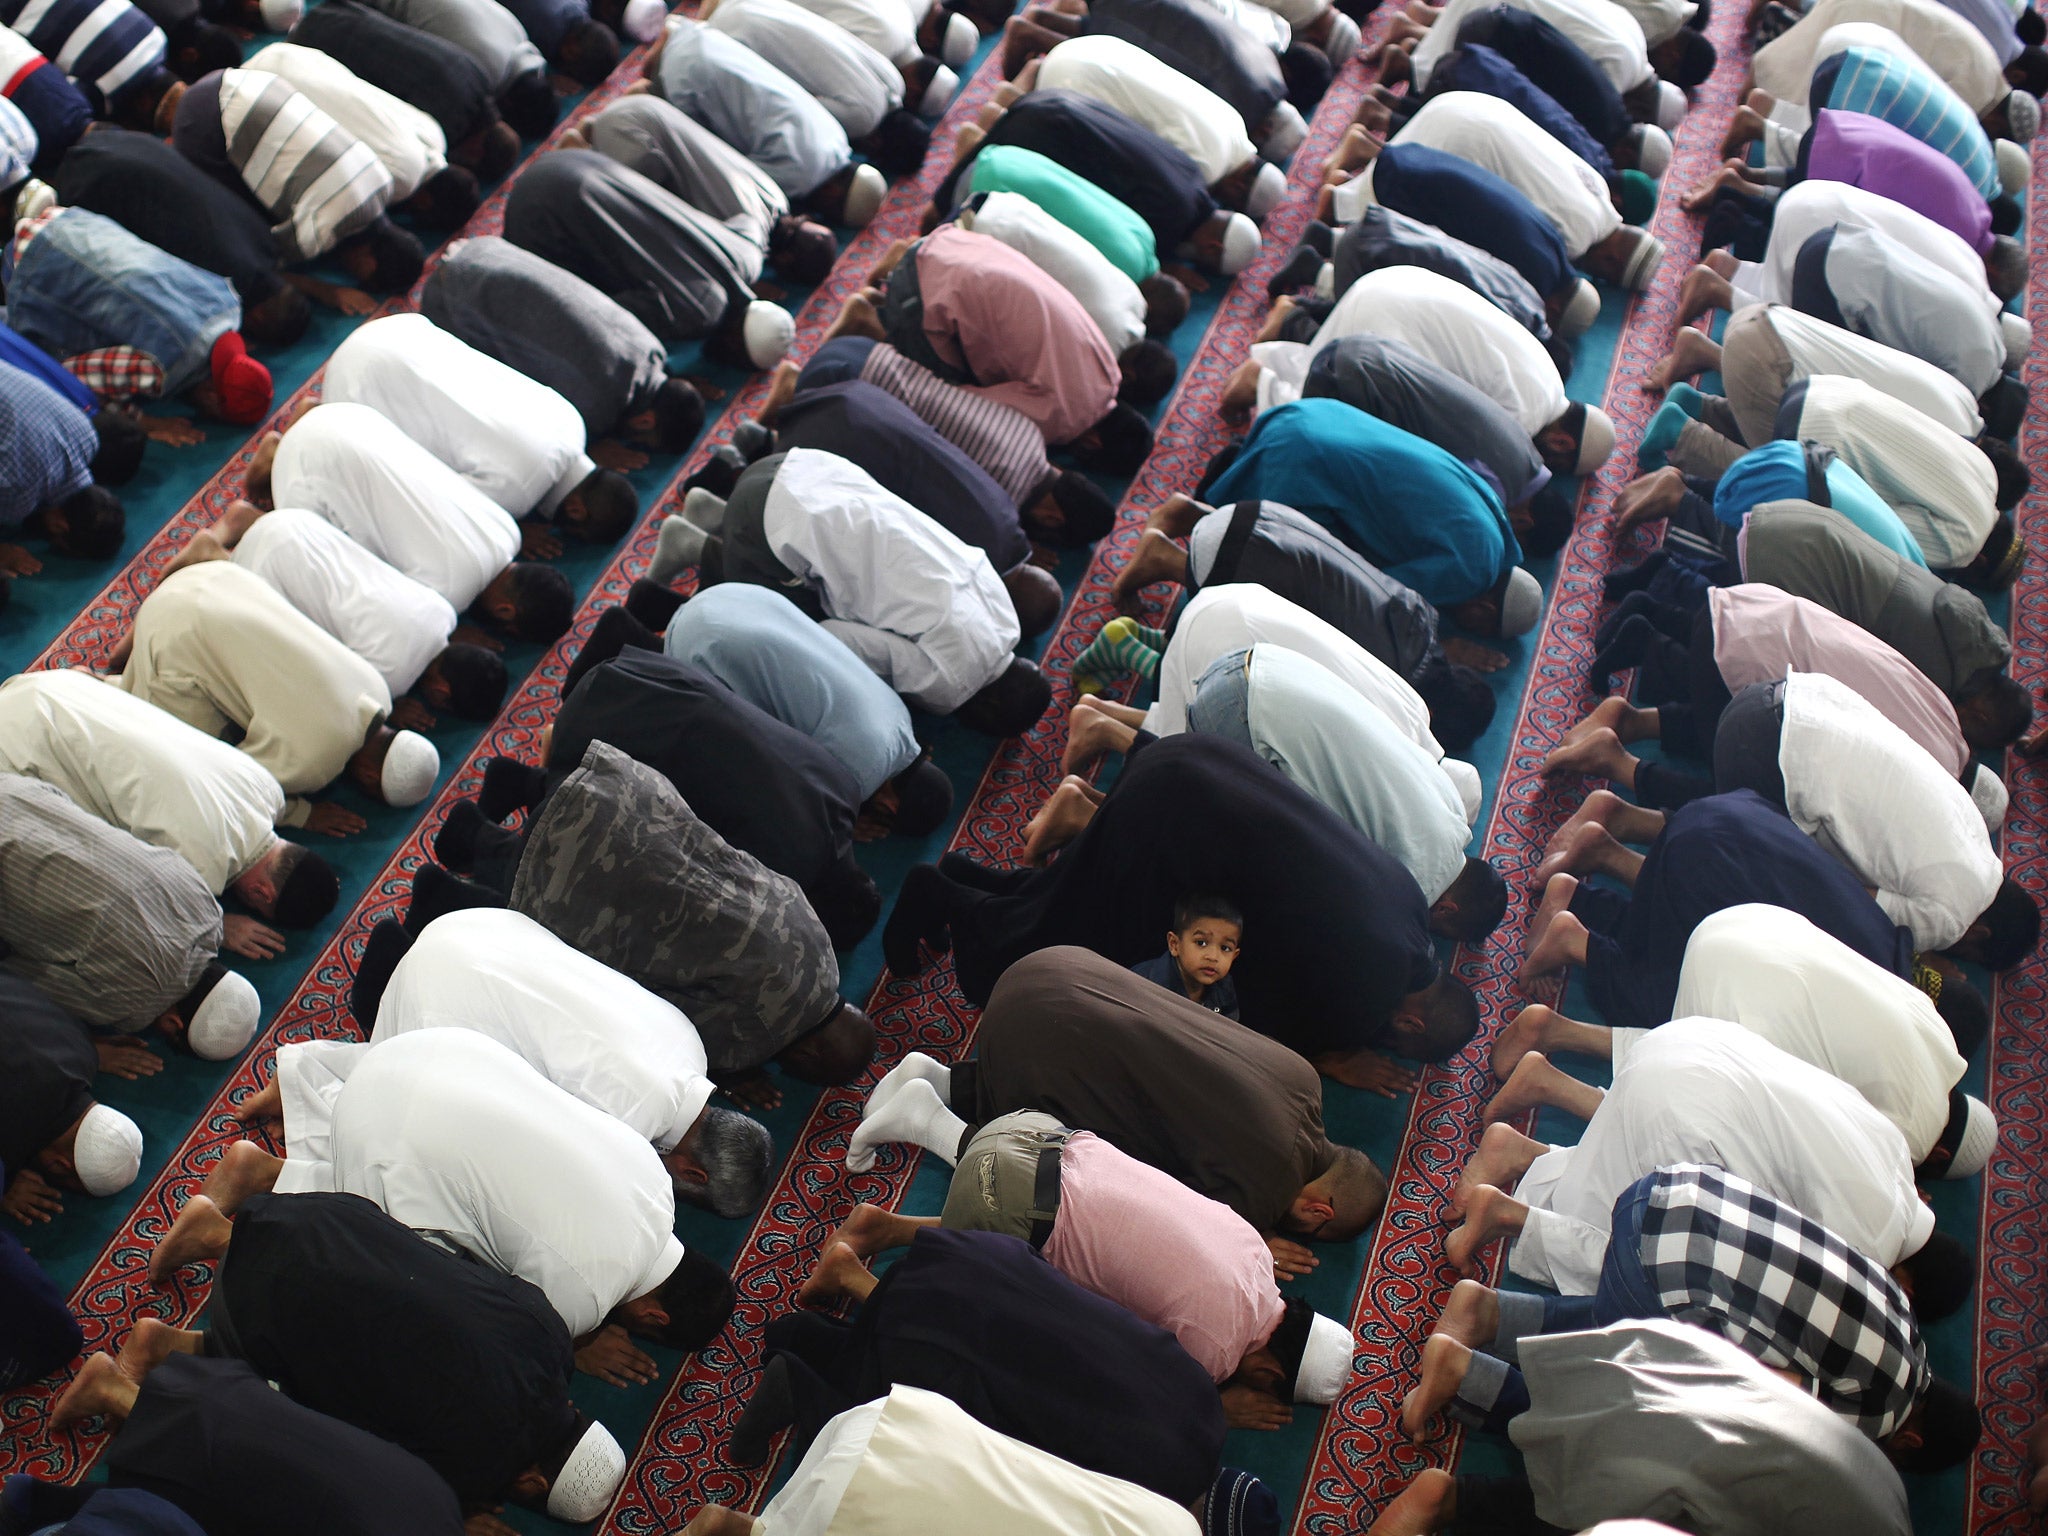 Muslim men pray at the East London Mosque